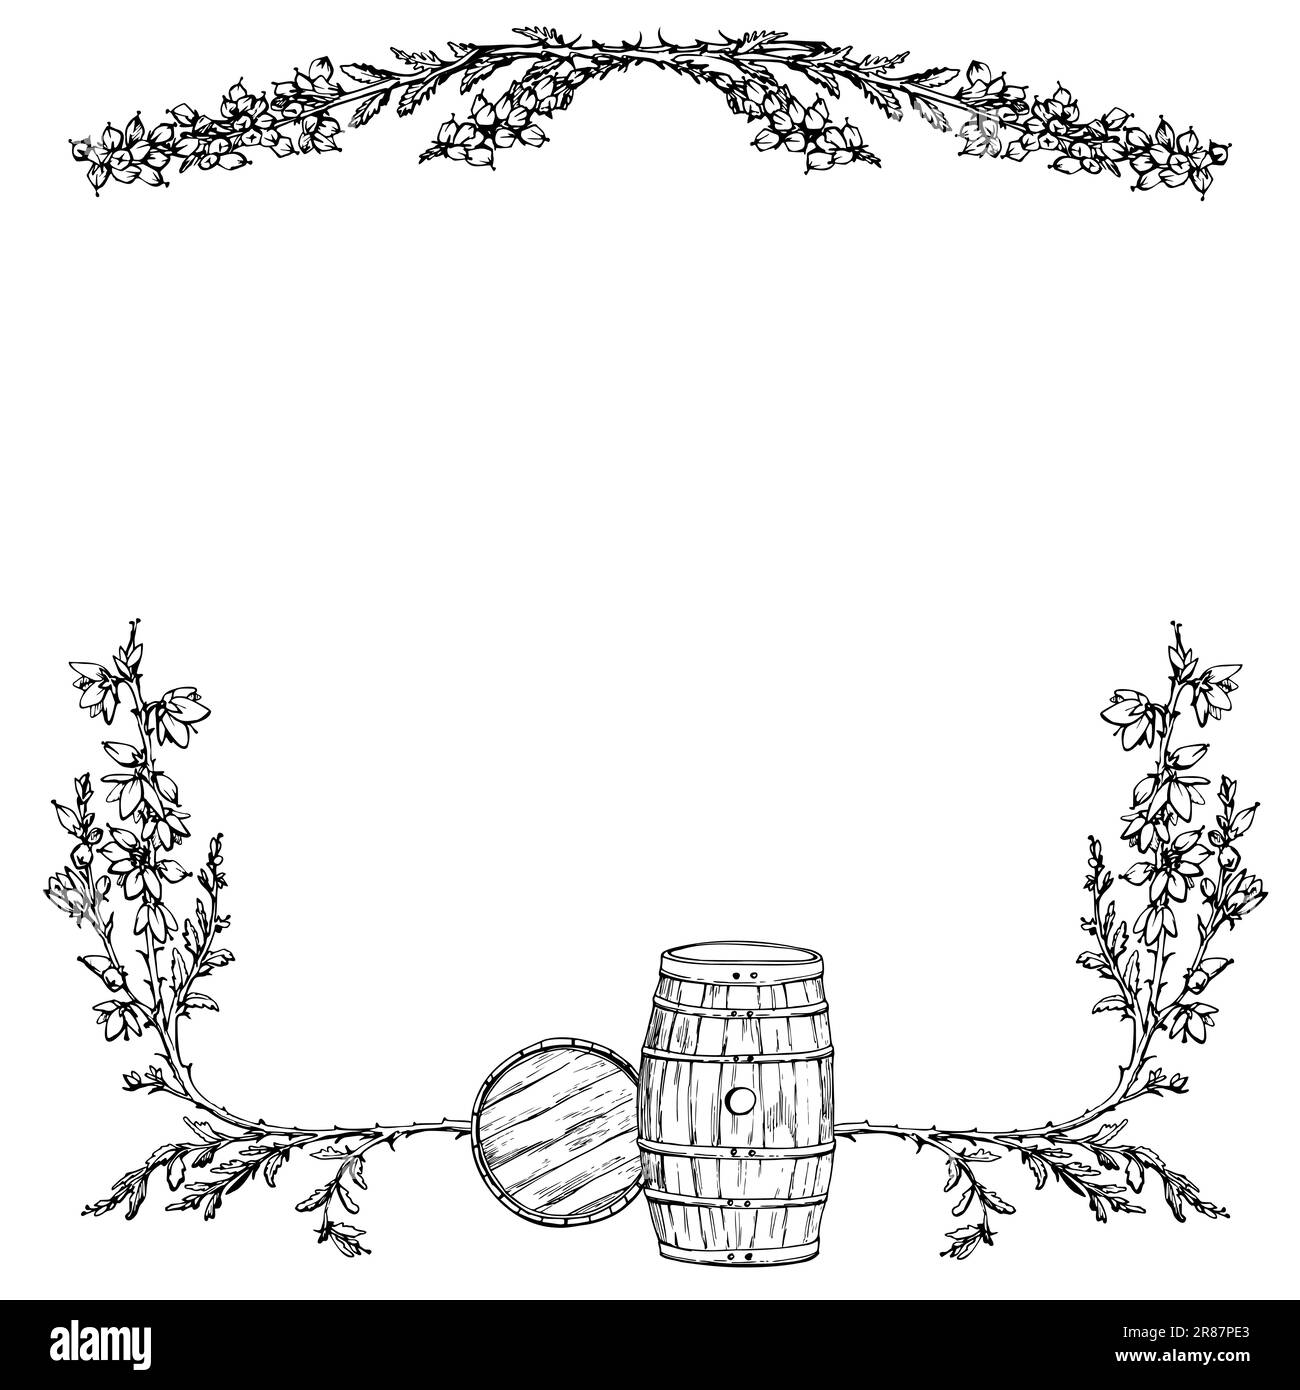 Ink hand drawn vector illustration. Scotland symbols. Scotch scottish whisky whiskey wooden barrels and heather plant flower border. Square frame Stock Vector